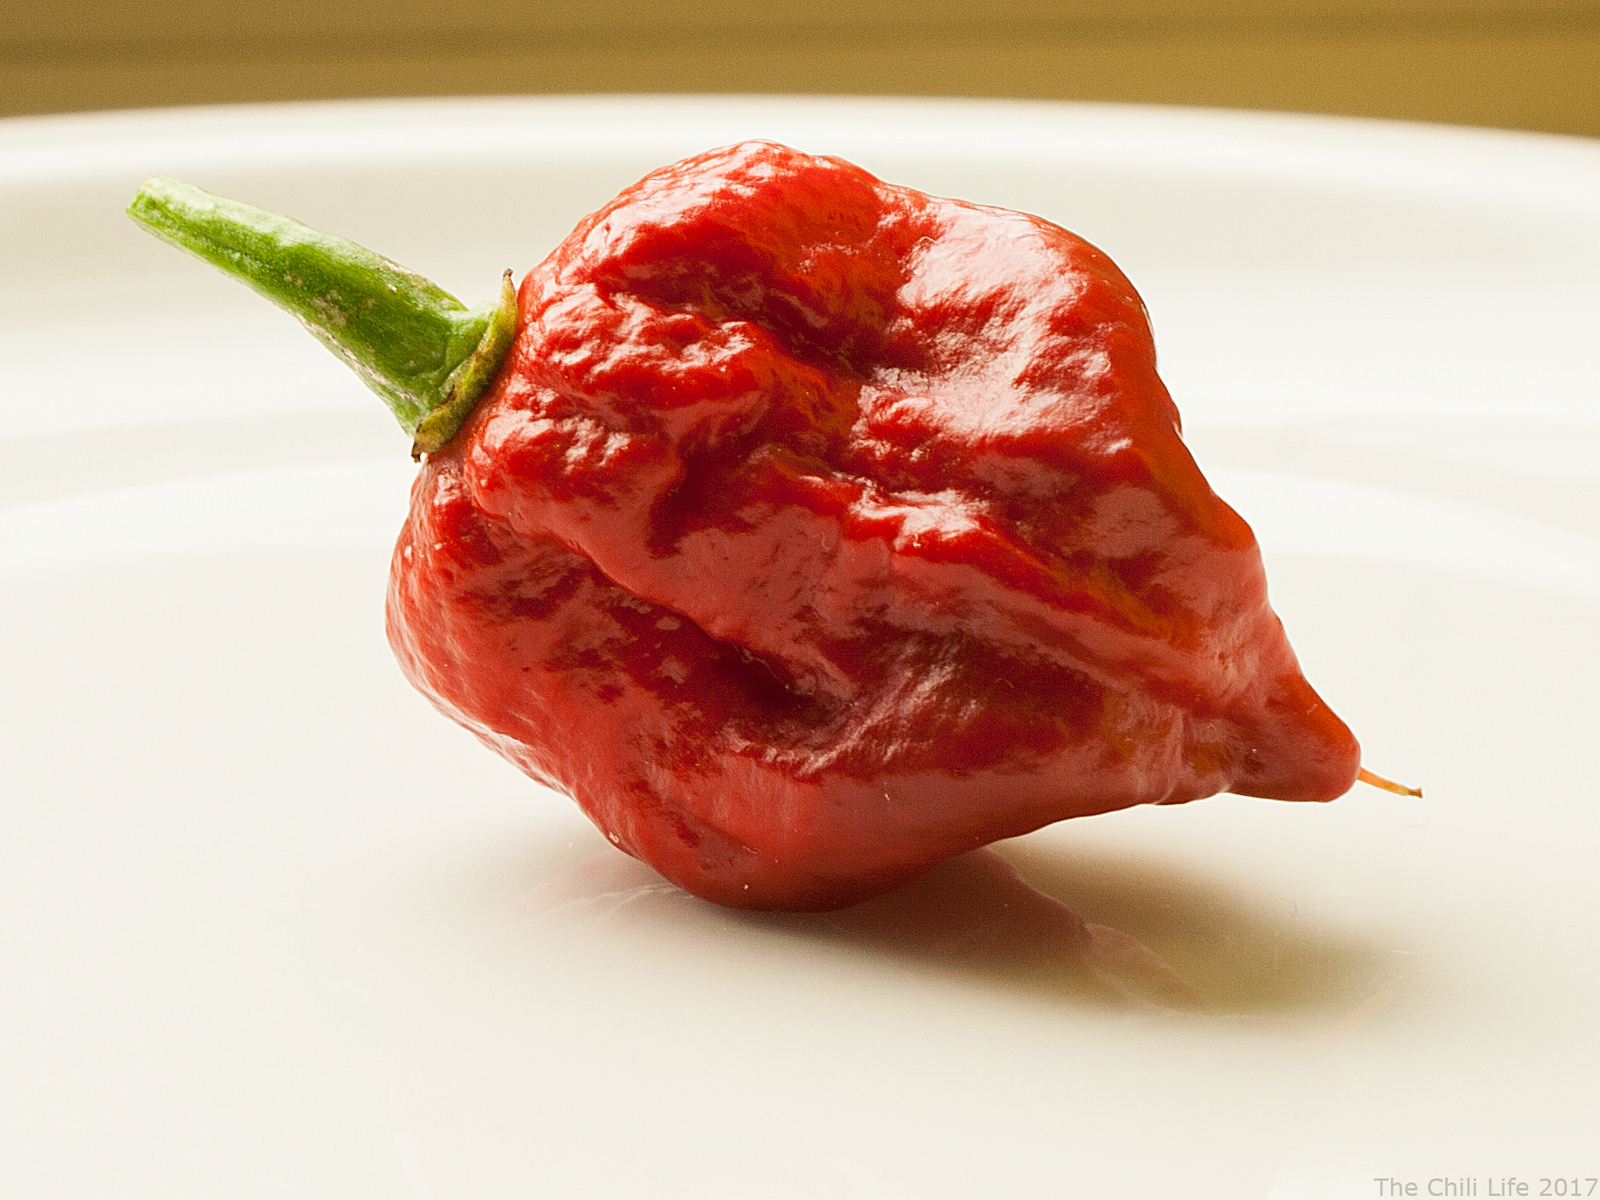 Carolina Reaper - Official World's Hottest Pepper